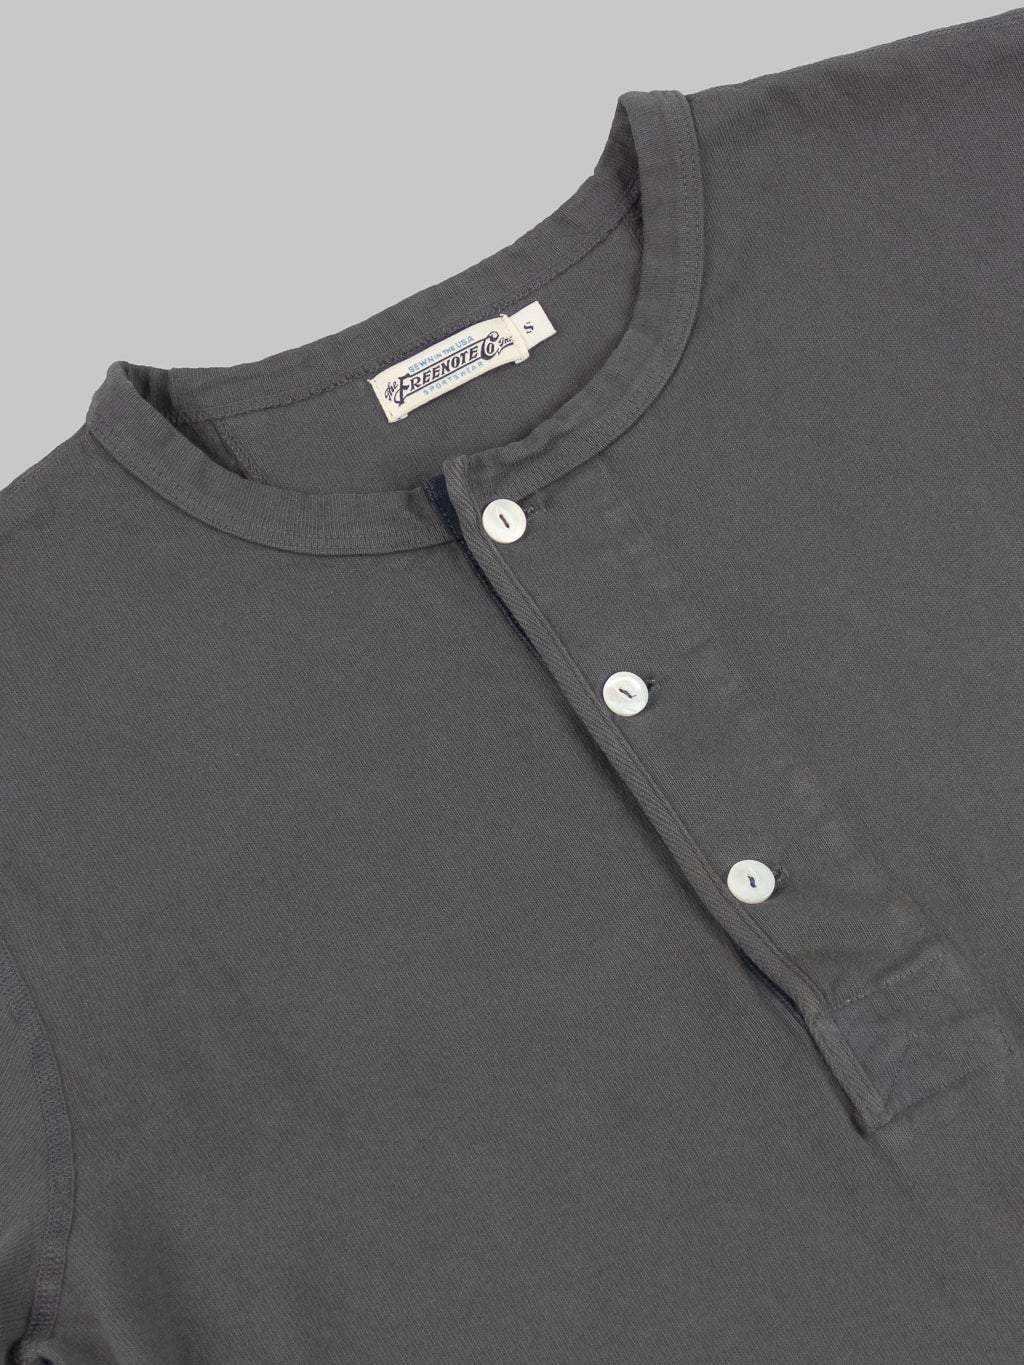 Freenote Cloth 13 Ounce Henley Long Sleeve Midnight grey collar buttons